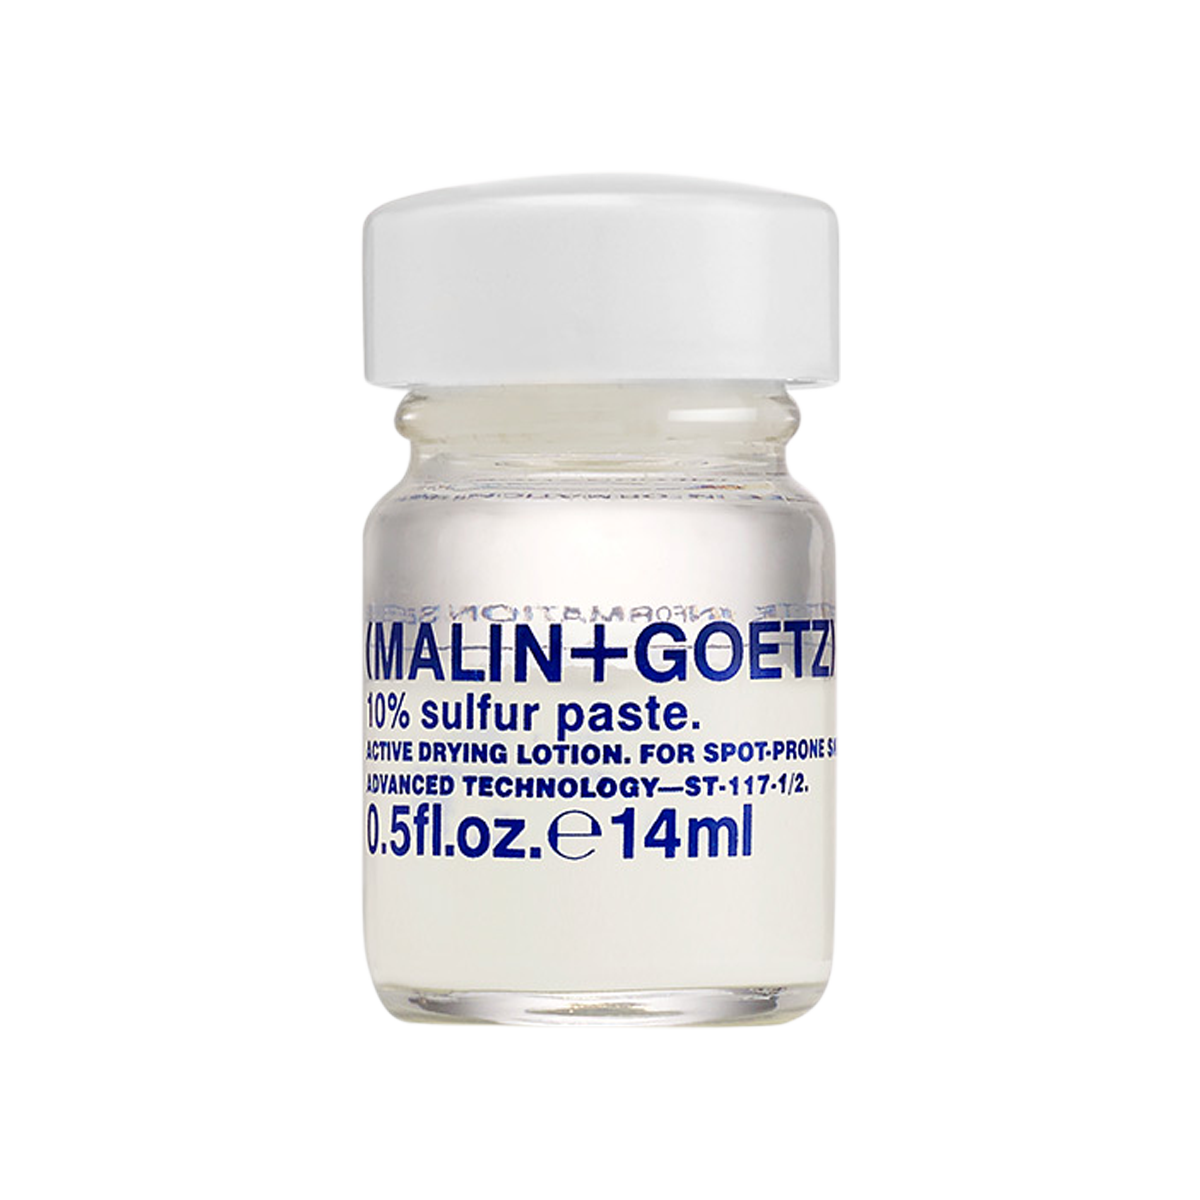 MALIN+GOETZ - 10% Sulfur Paste